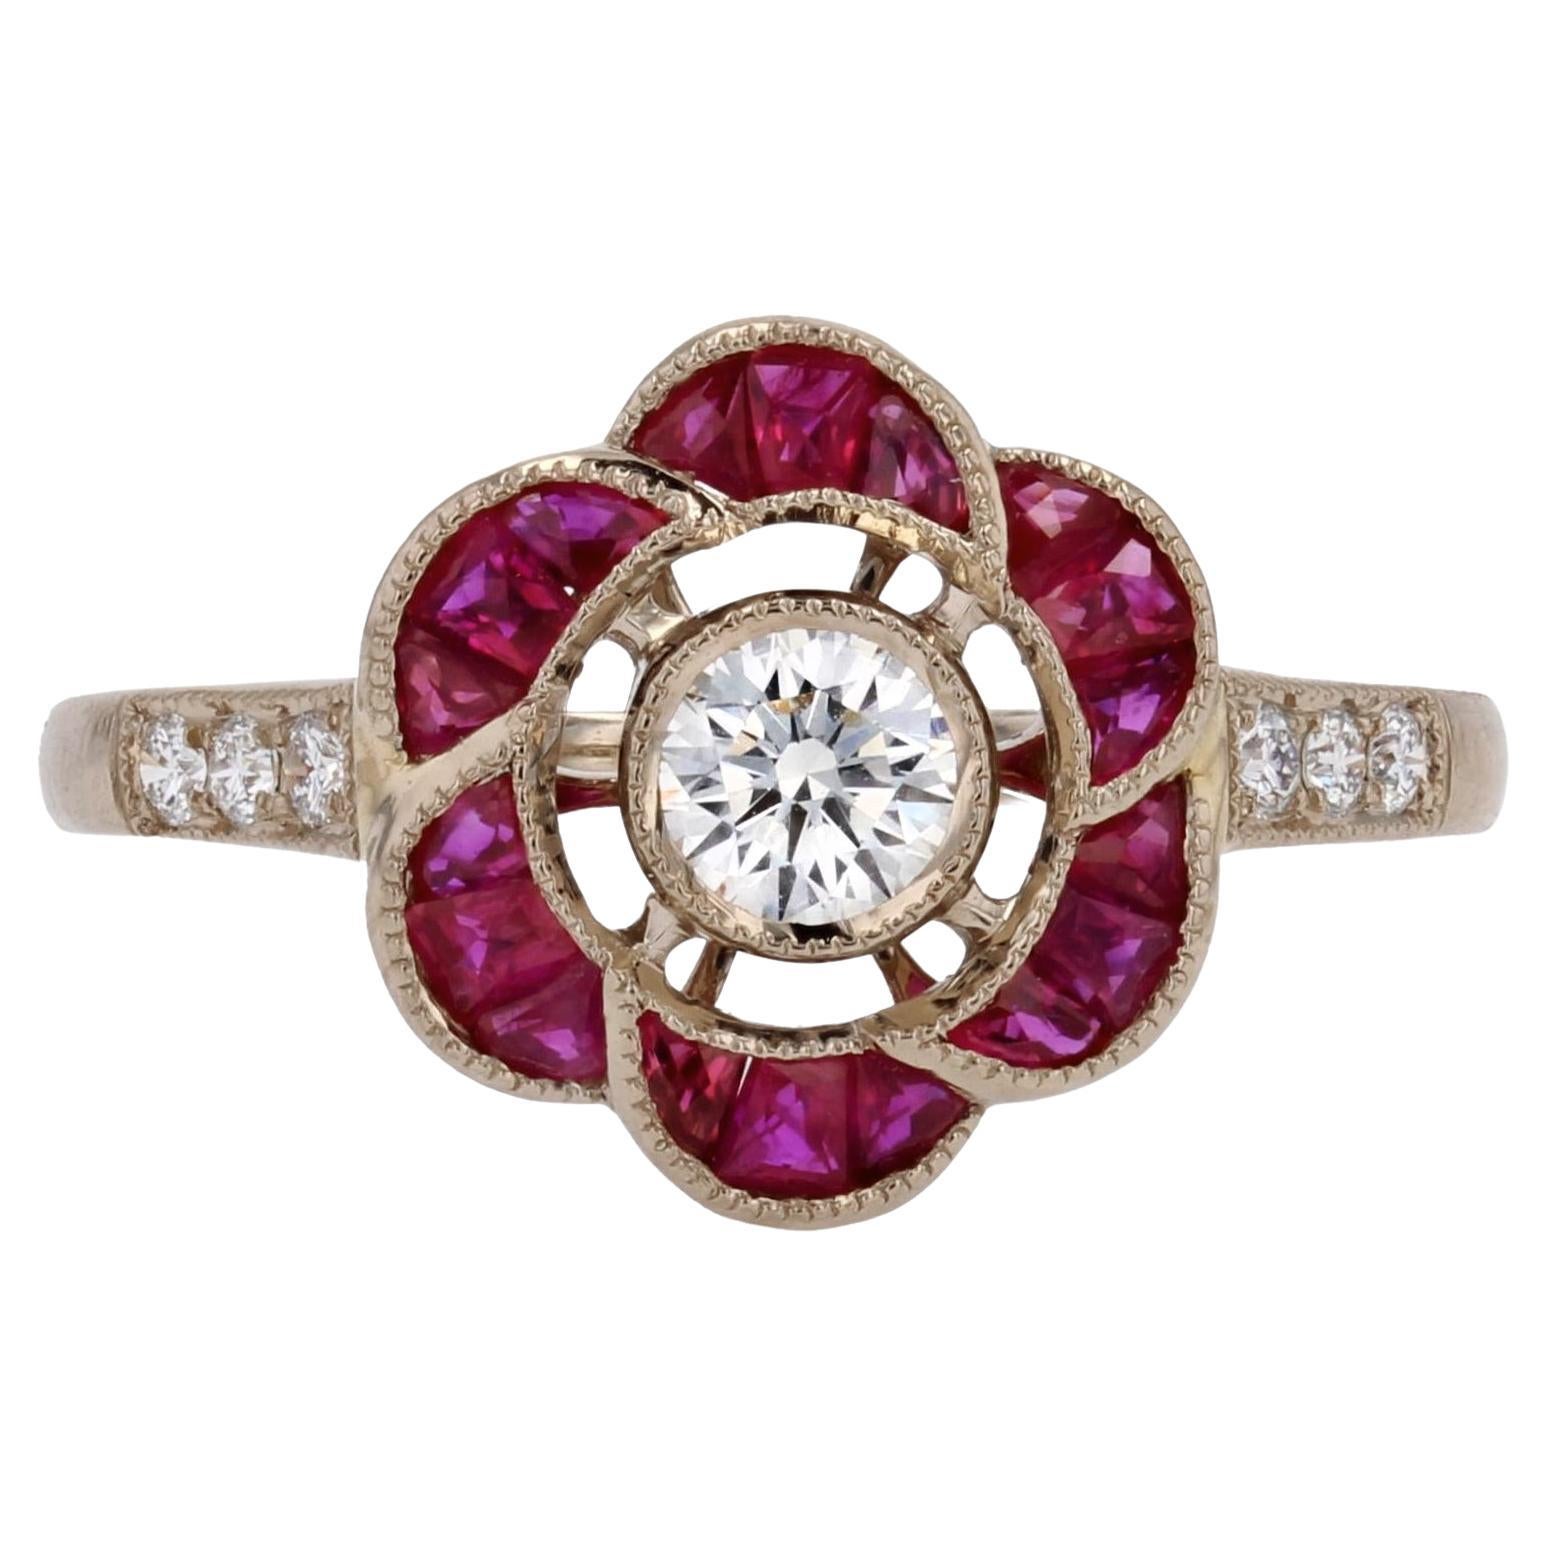 New Art Deco Style Calibrated Rubies Diamonds 18 Karat White Gold Flower Ring